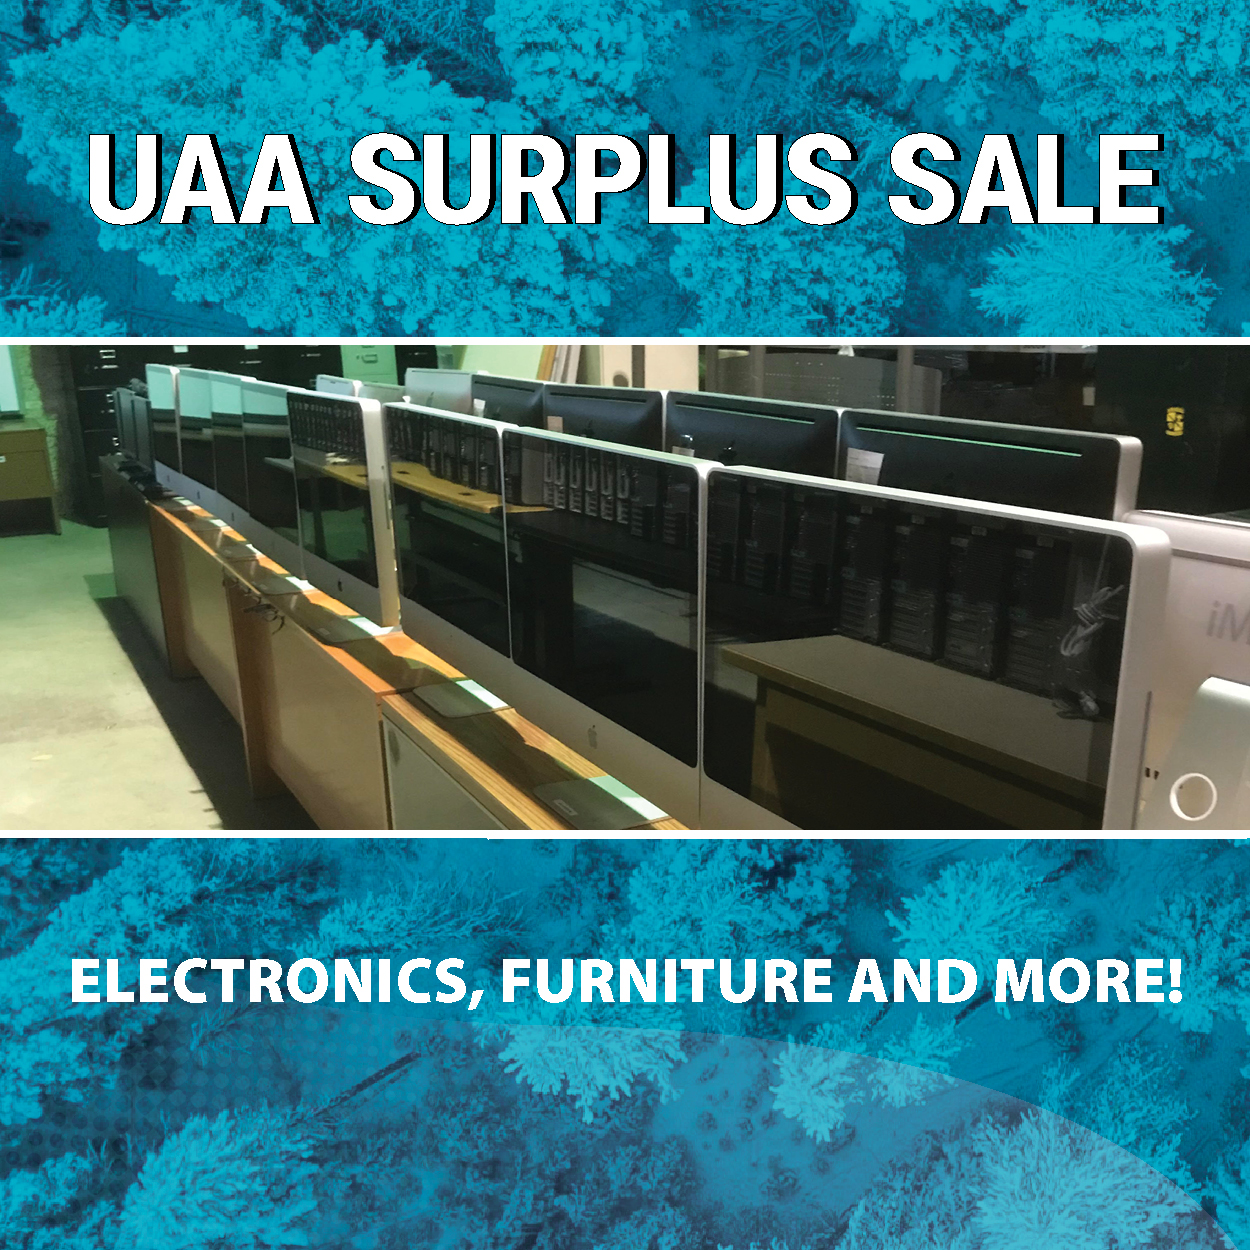 UAA Surplus Sale: Electronics, furniture and more!